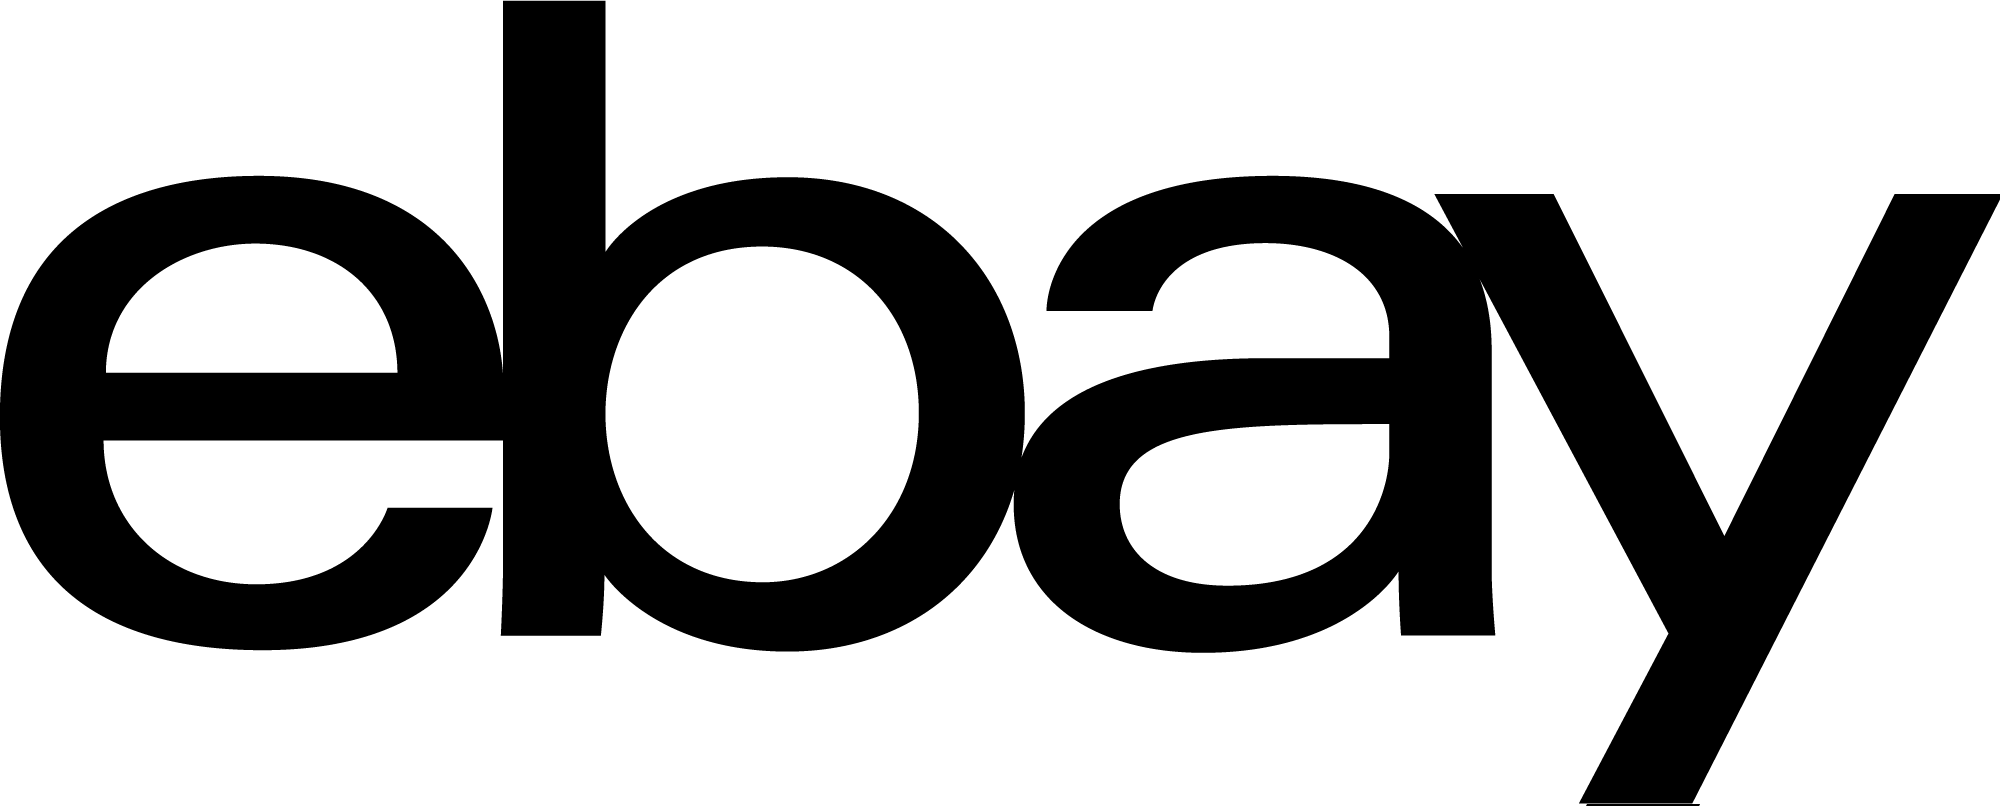 black ebay logo png